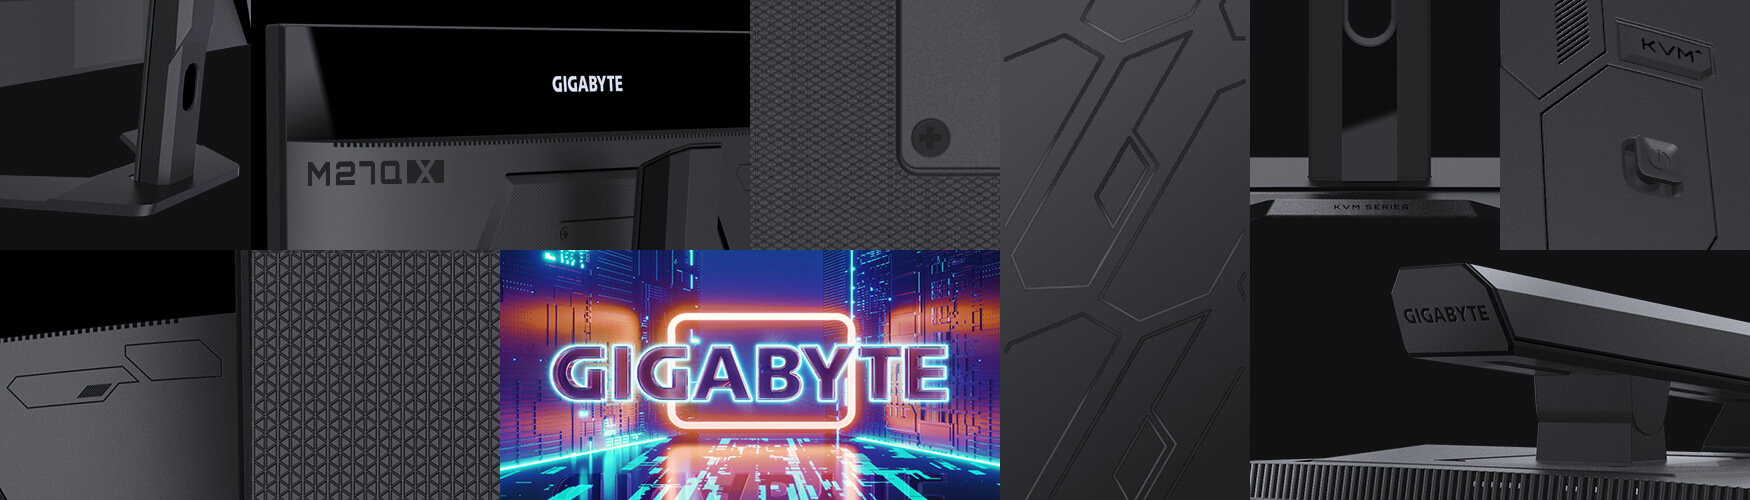 GIGABYTE M27Q-X 27 240Hz 1440P KVM Gaming Monitor, 2560 x 1440 SS IPS  Display, 1ms (GTG) Response Time, 92% DCI-P3, 1x Display Port 1.4, 2x HDMI  2.0, 2x USB 3.0, 1x USB Type-C 